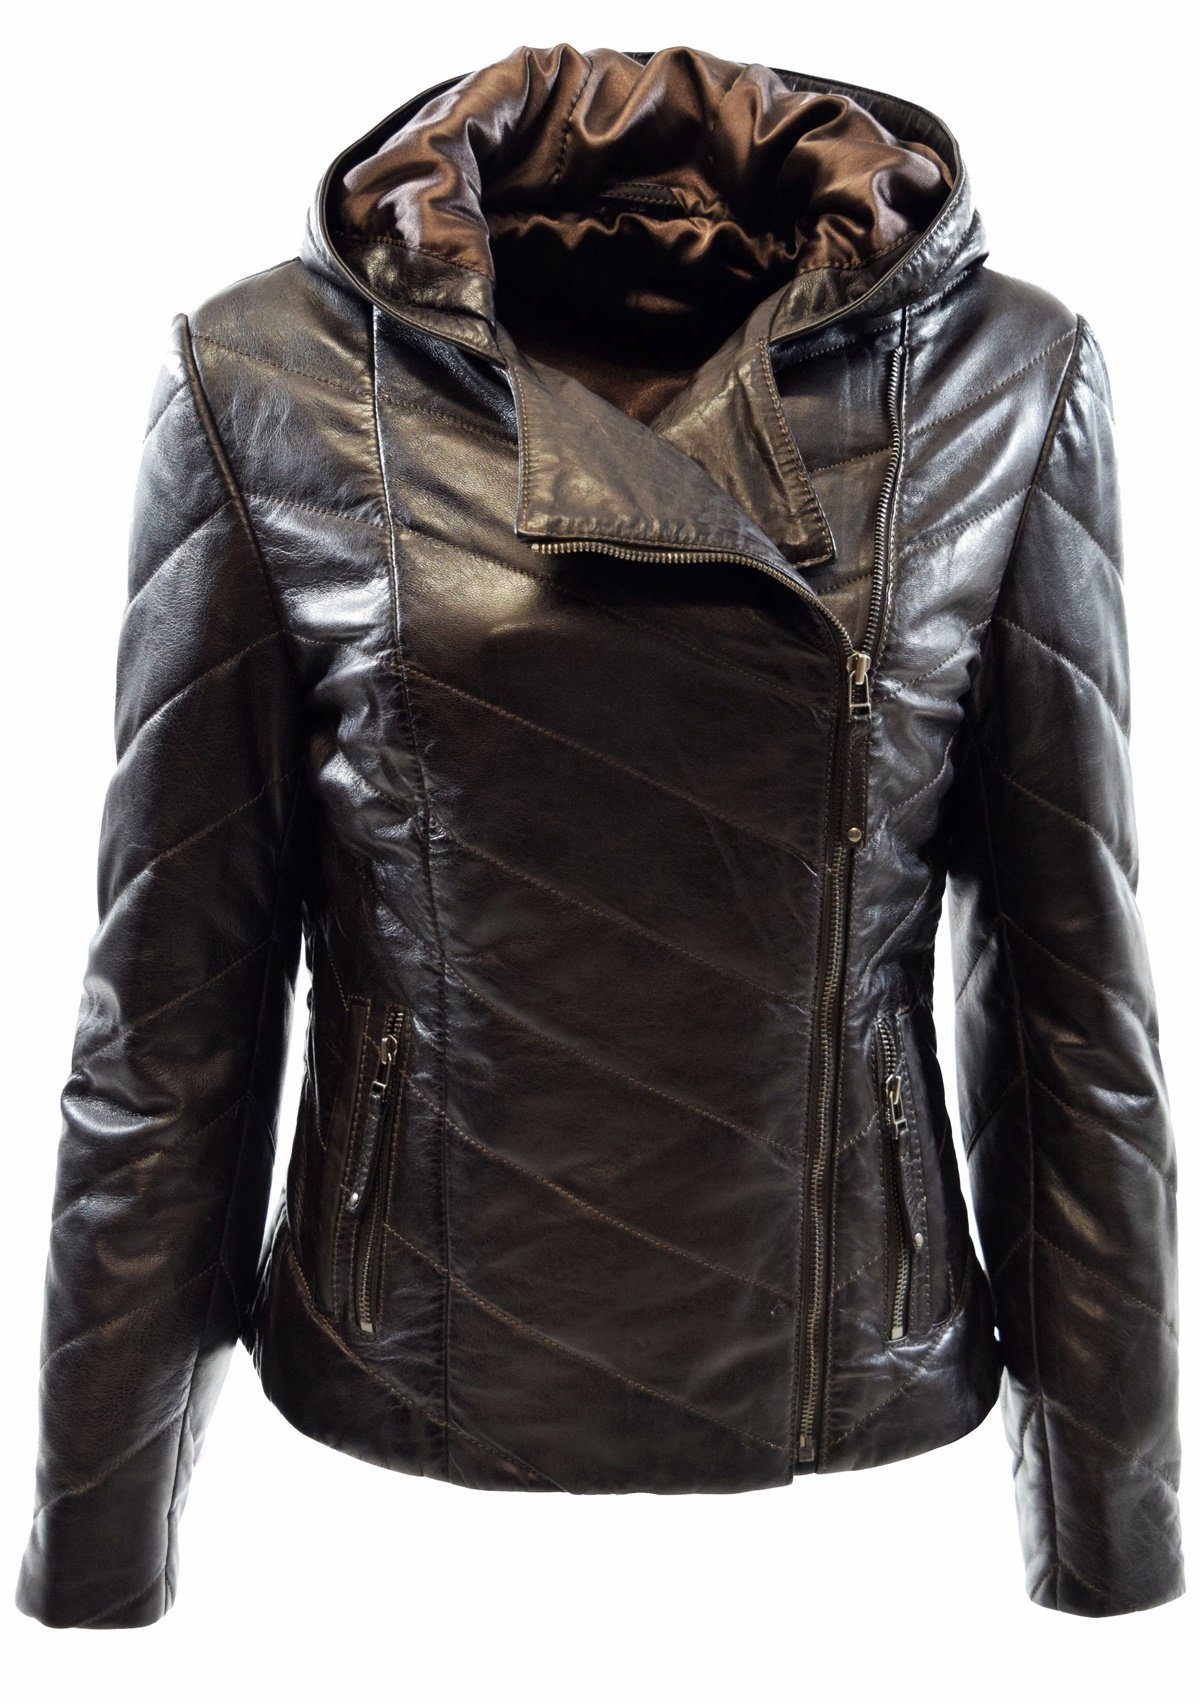 Zimmert Leather Lederjacke Elda Stepp-Lederjacke aus weichem Leder mit Kapuze Schwarz, Braun Tiefbraun